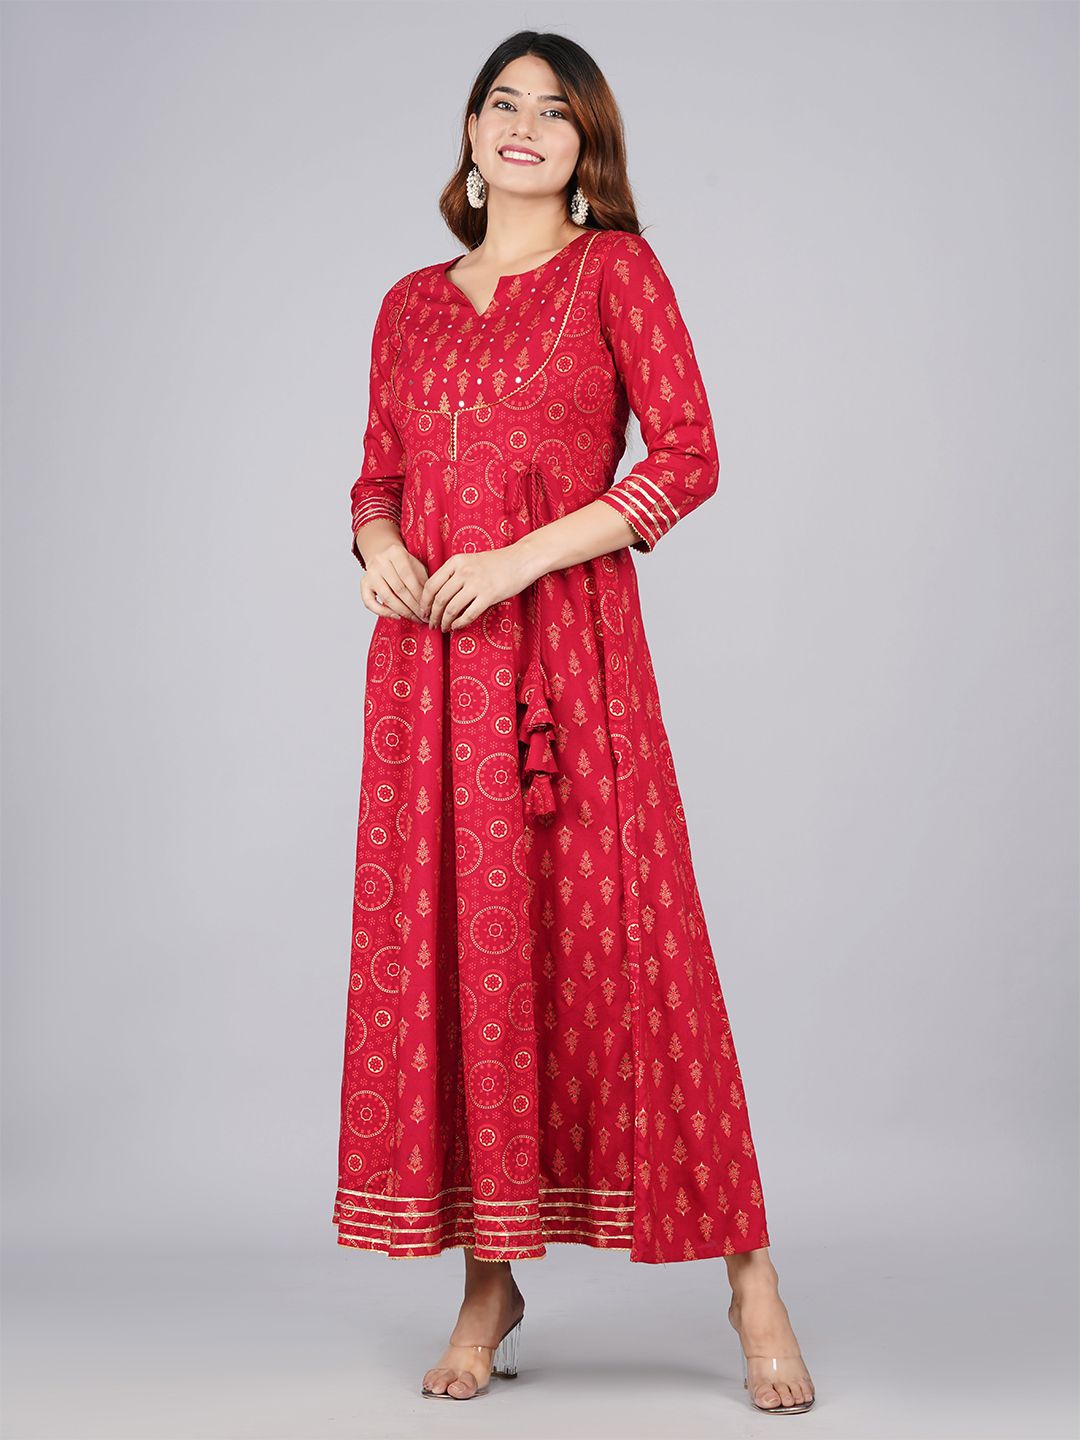 KALINI Maroon Ethnic Motifs Ethnic Maxi Dress Price in India